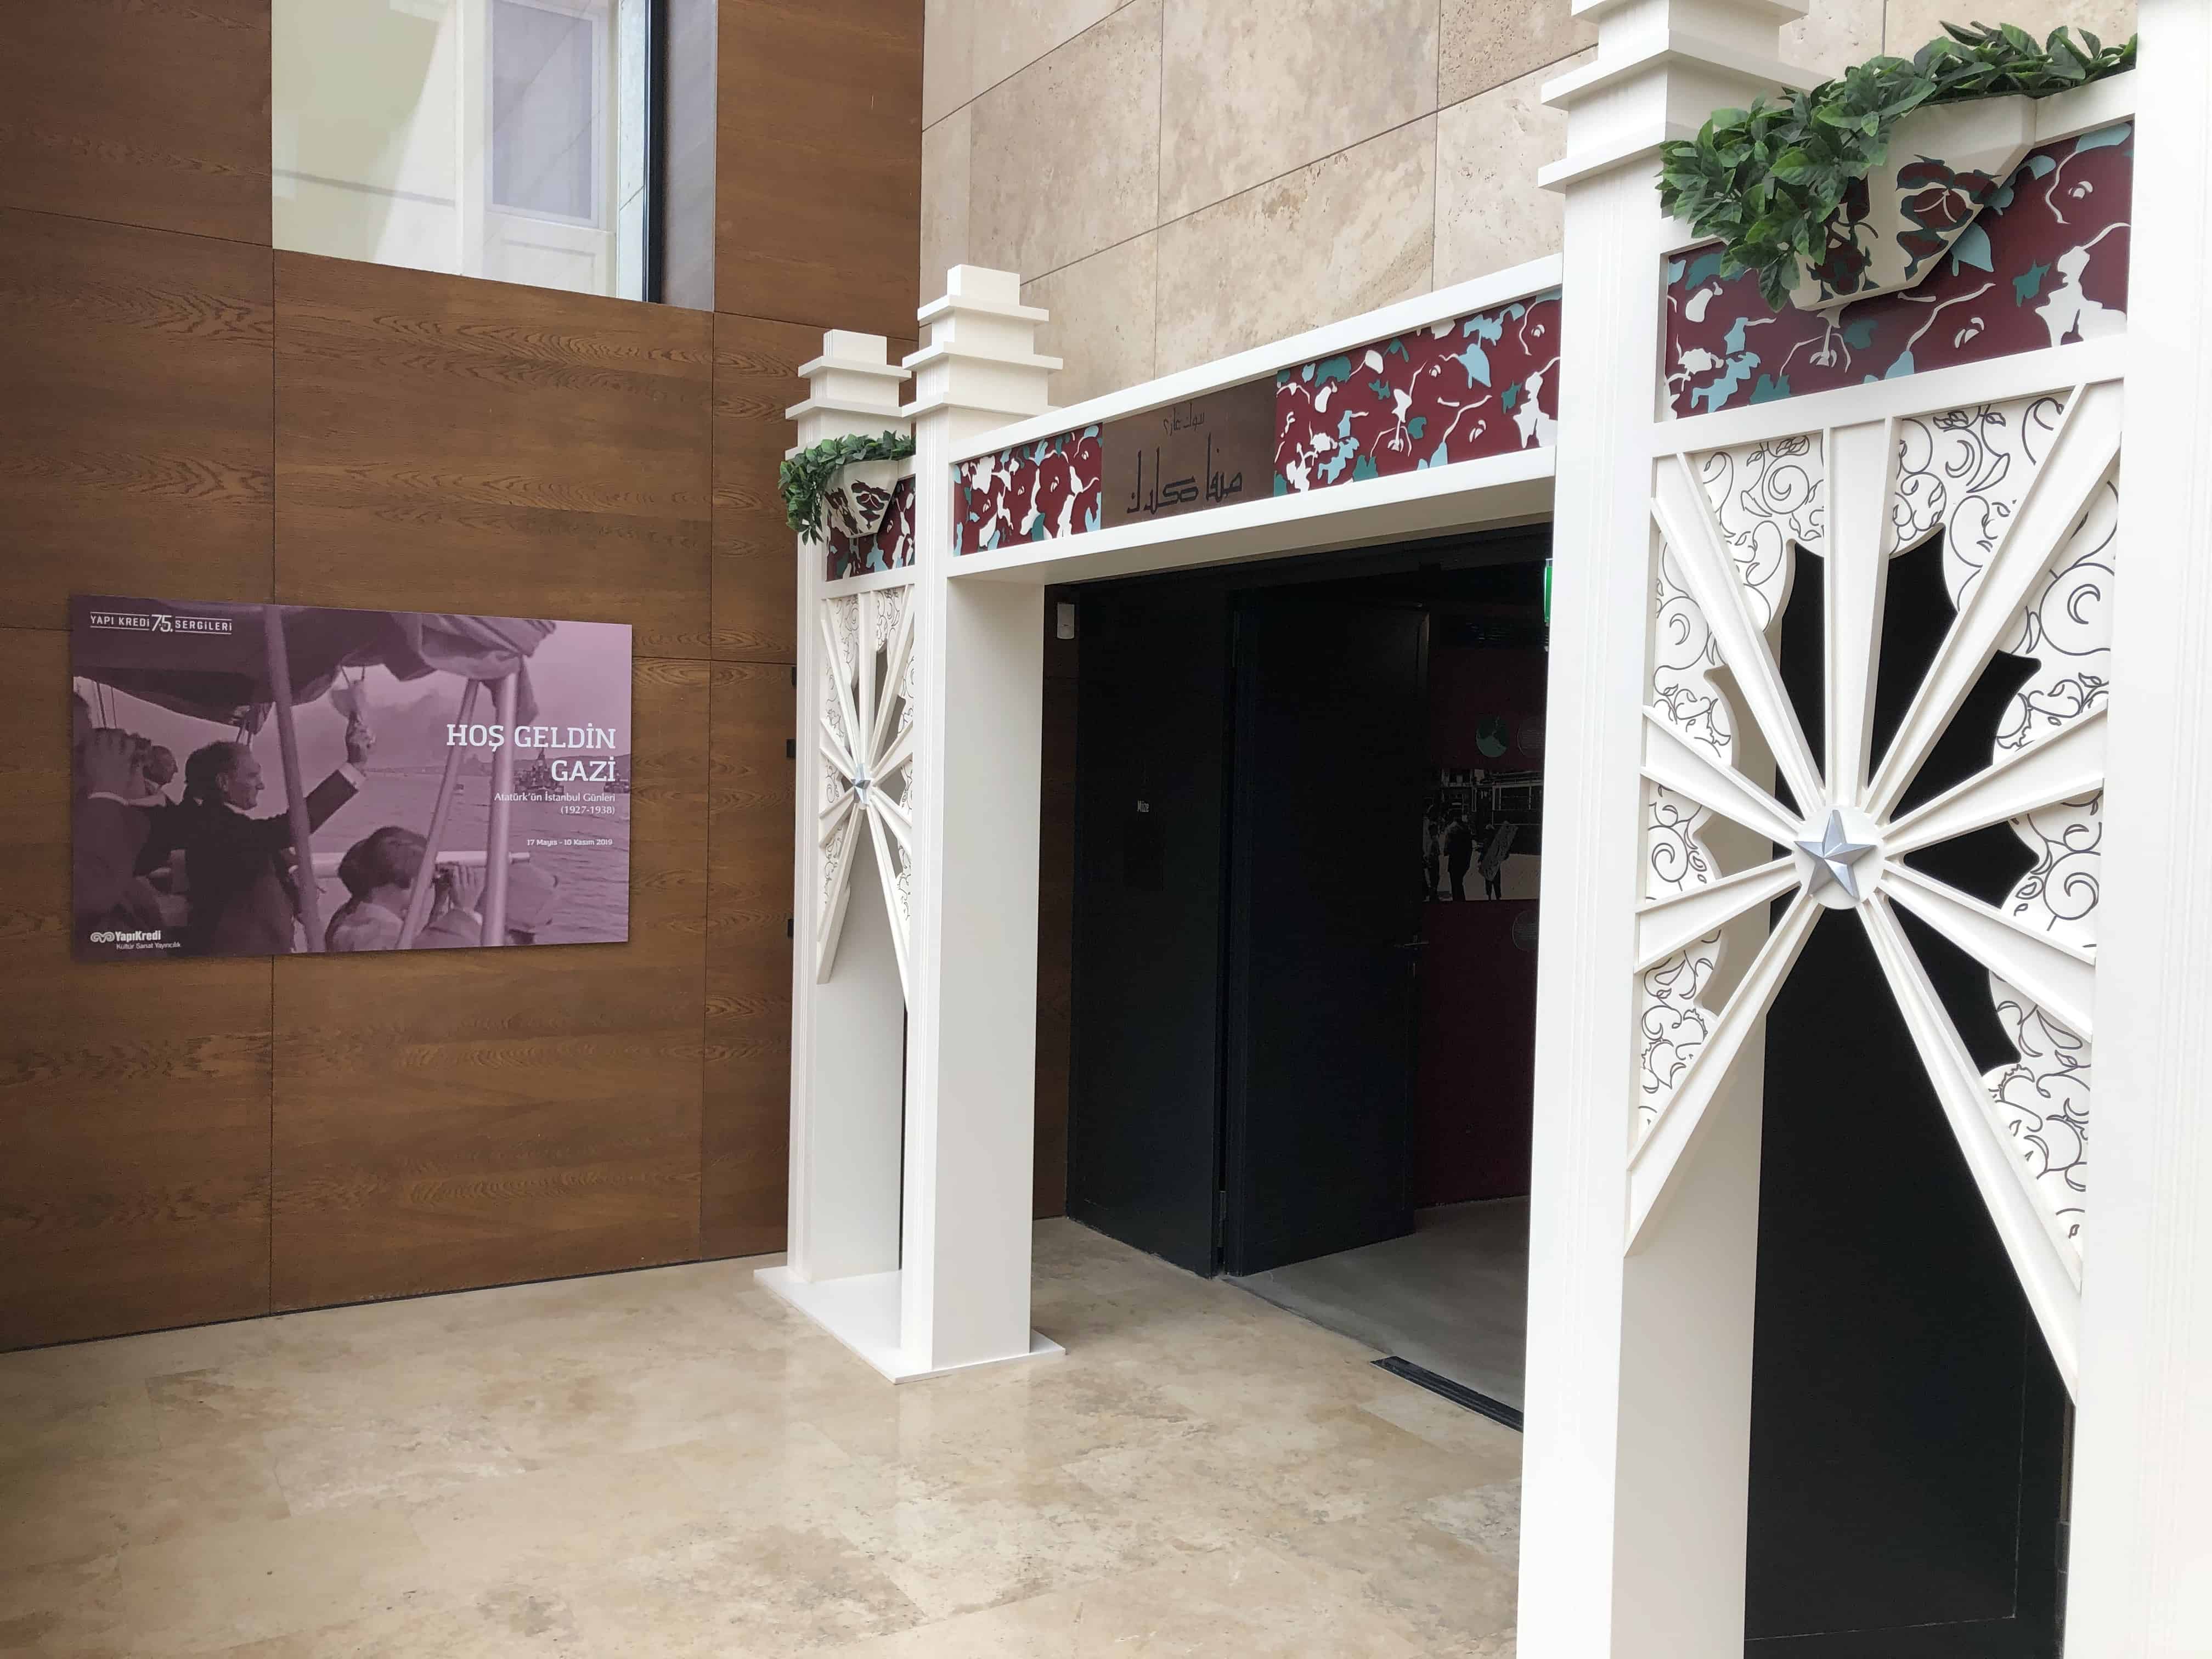 Entrance to the Atatürk exhibit at Yapı Kredi Cultural Center in Istanbul, Turkey